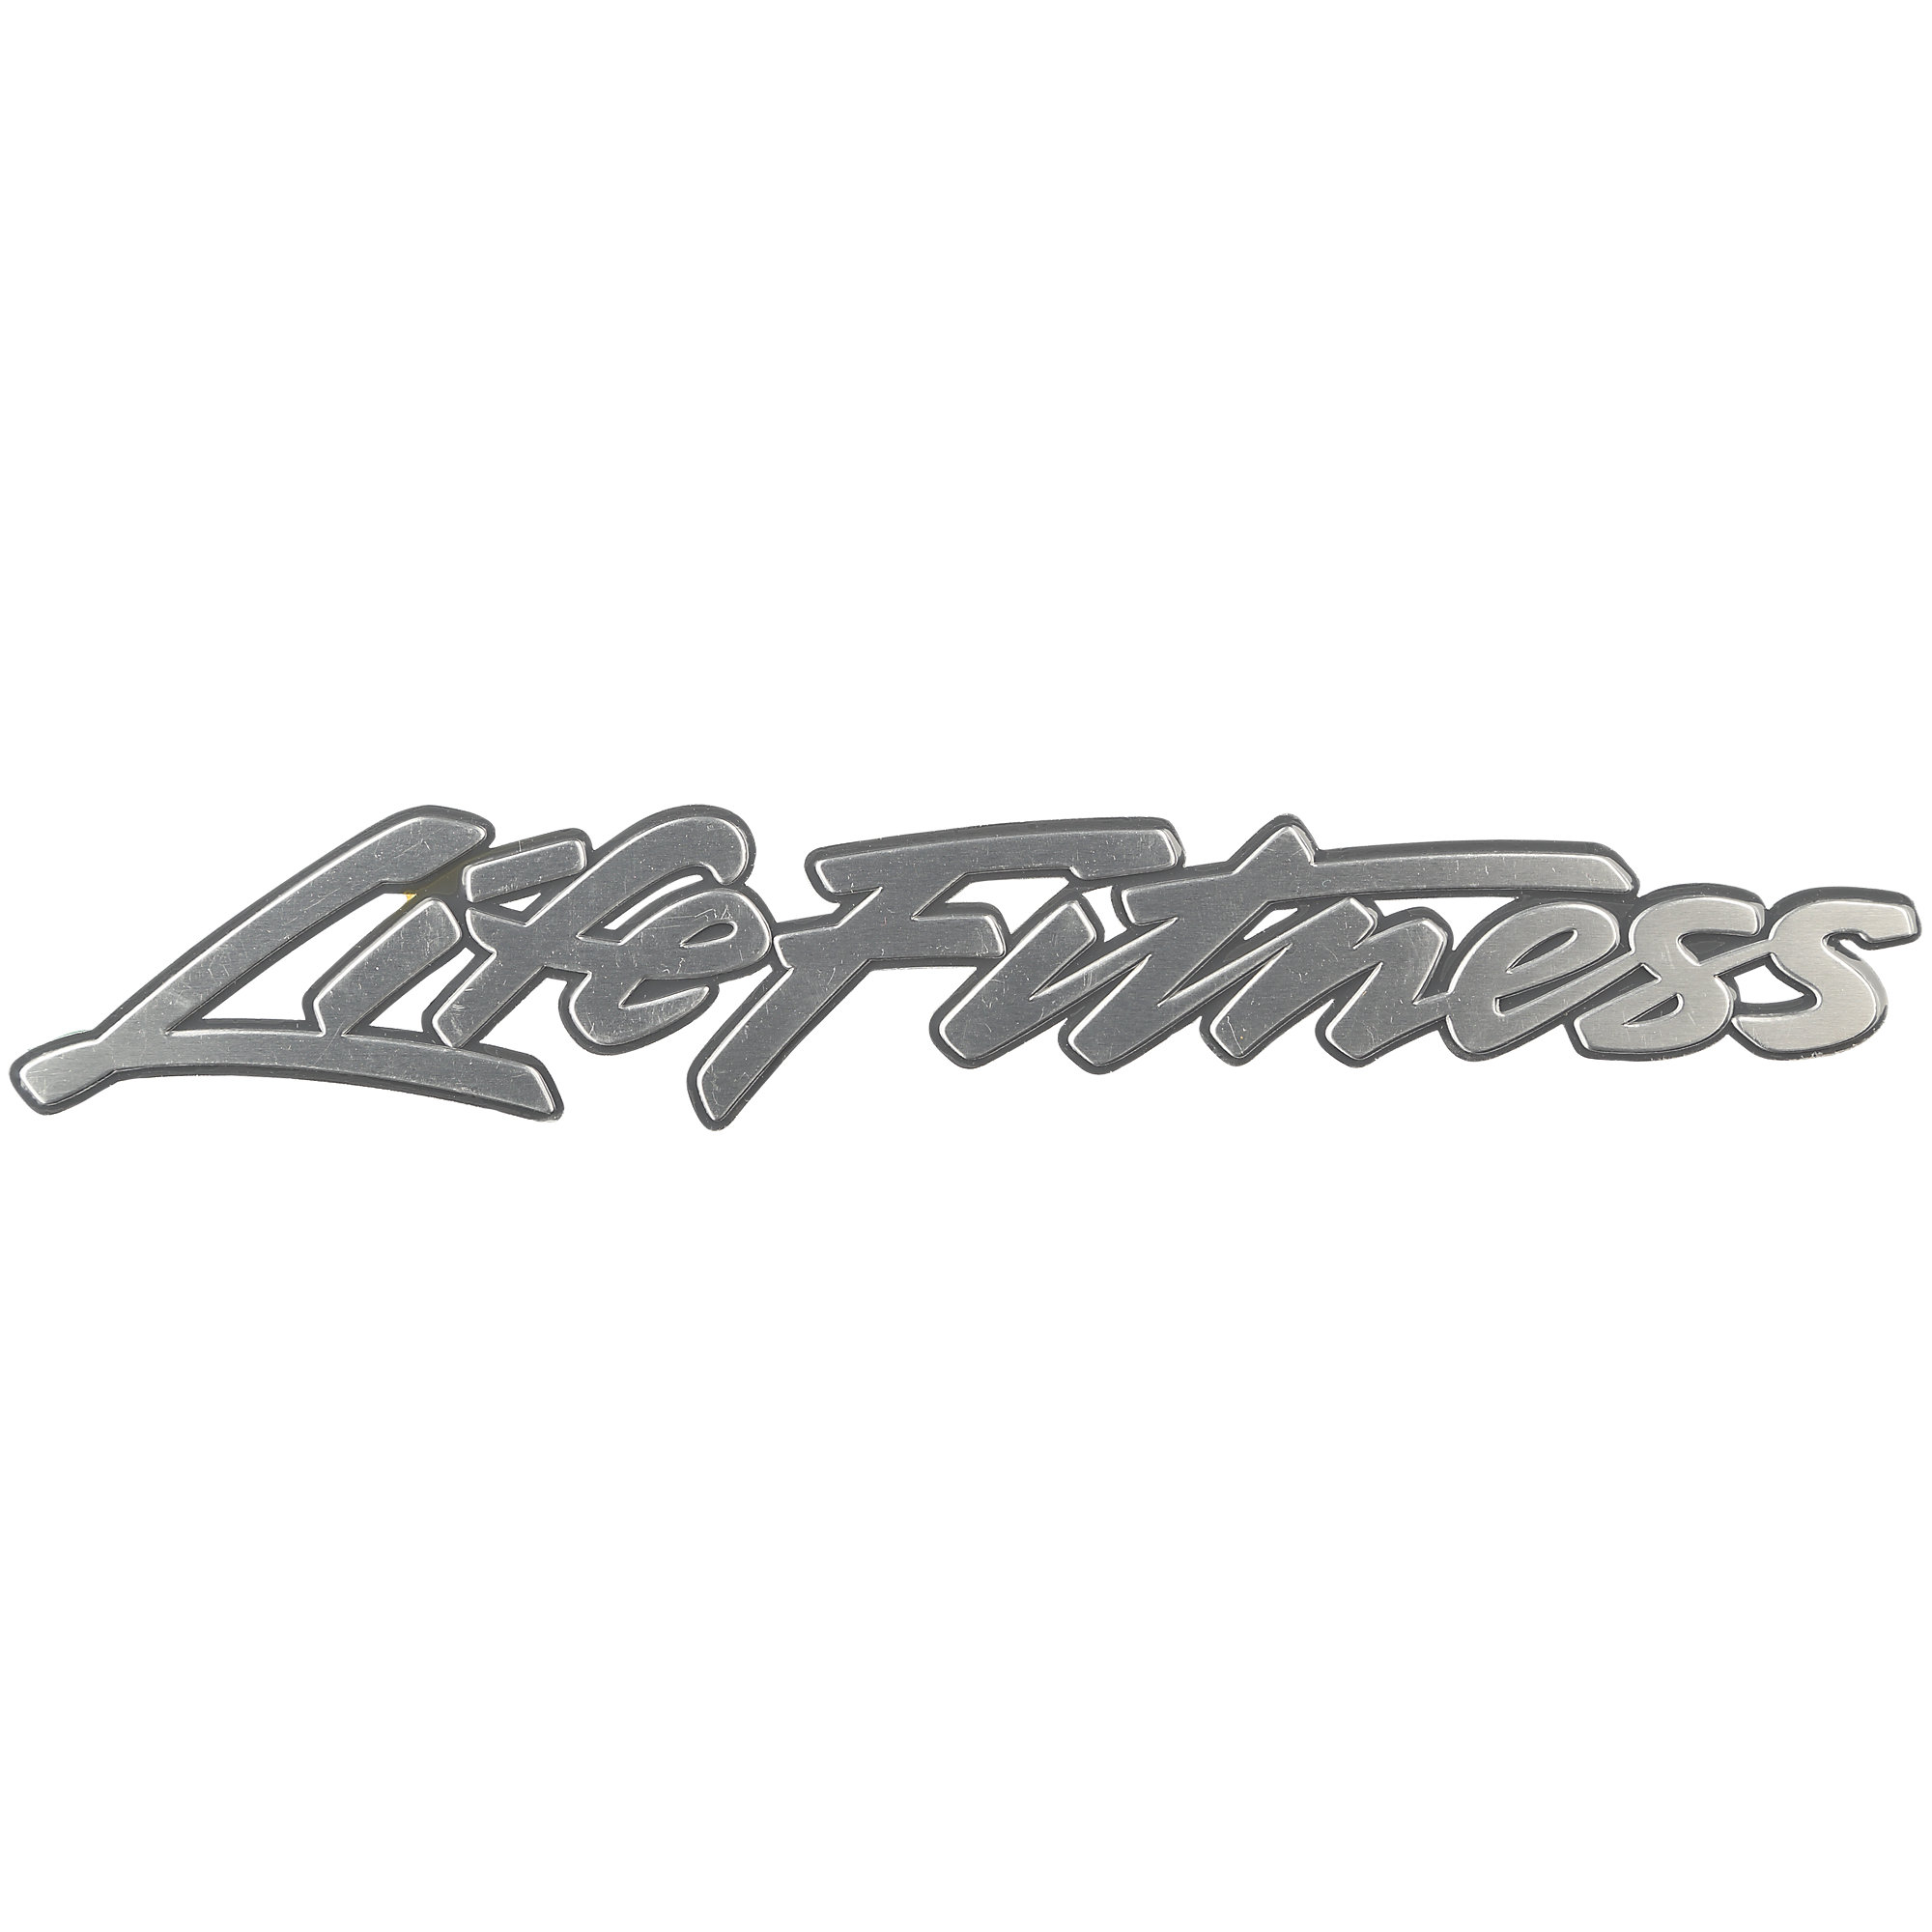 Decal for Frame Life Fitness Logo